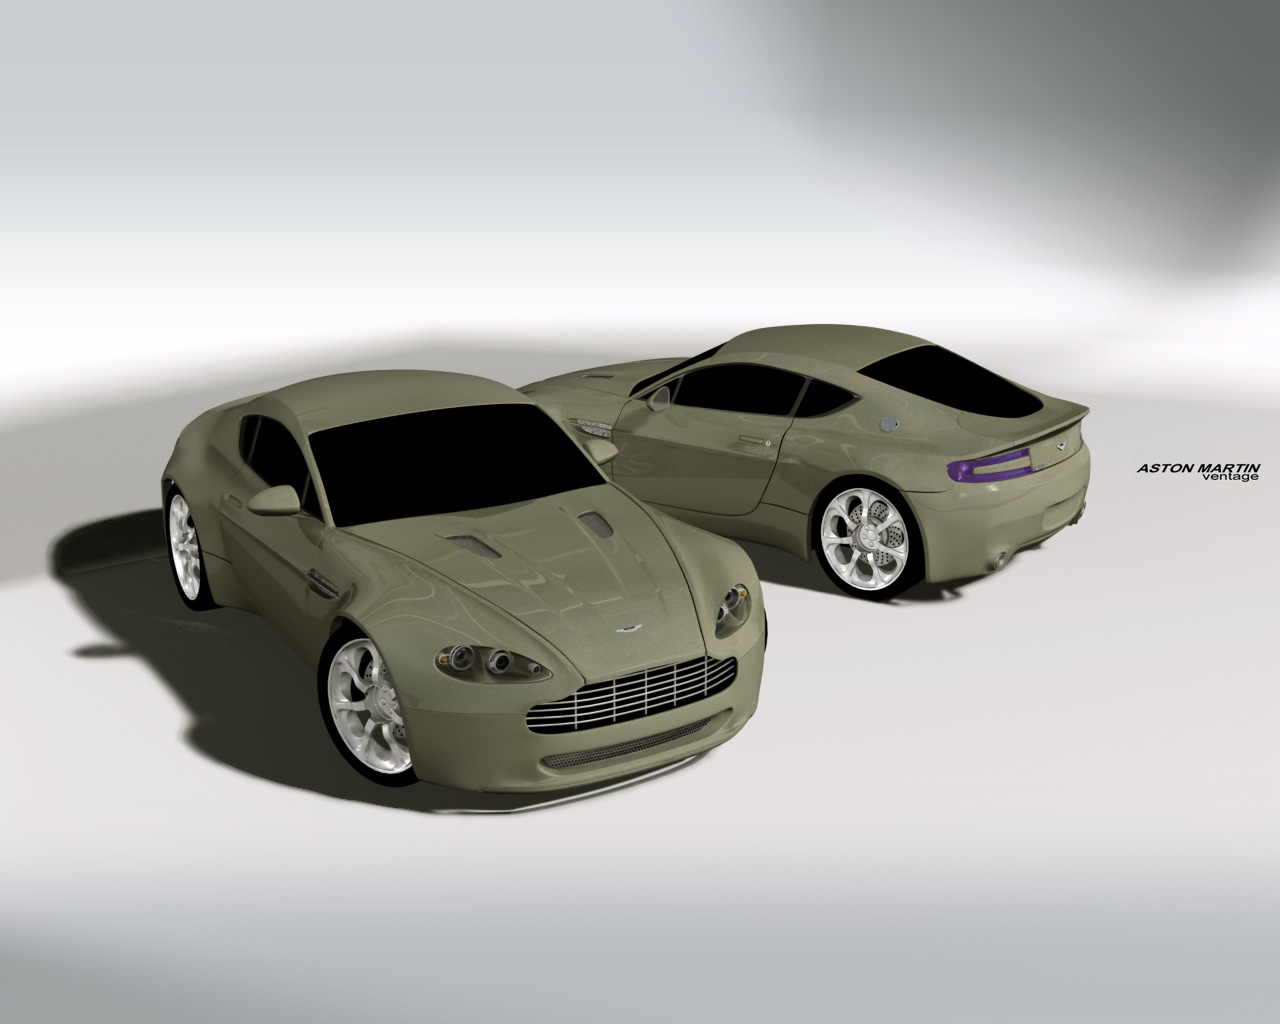 Aston Martin Ventage by mkapelac